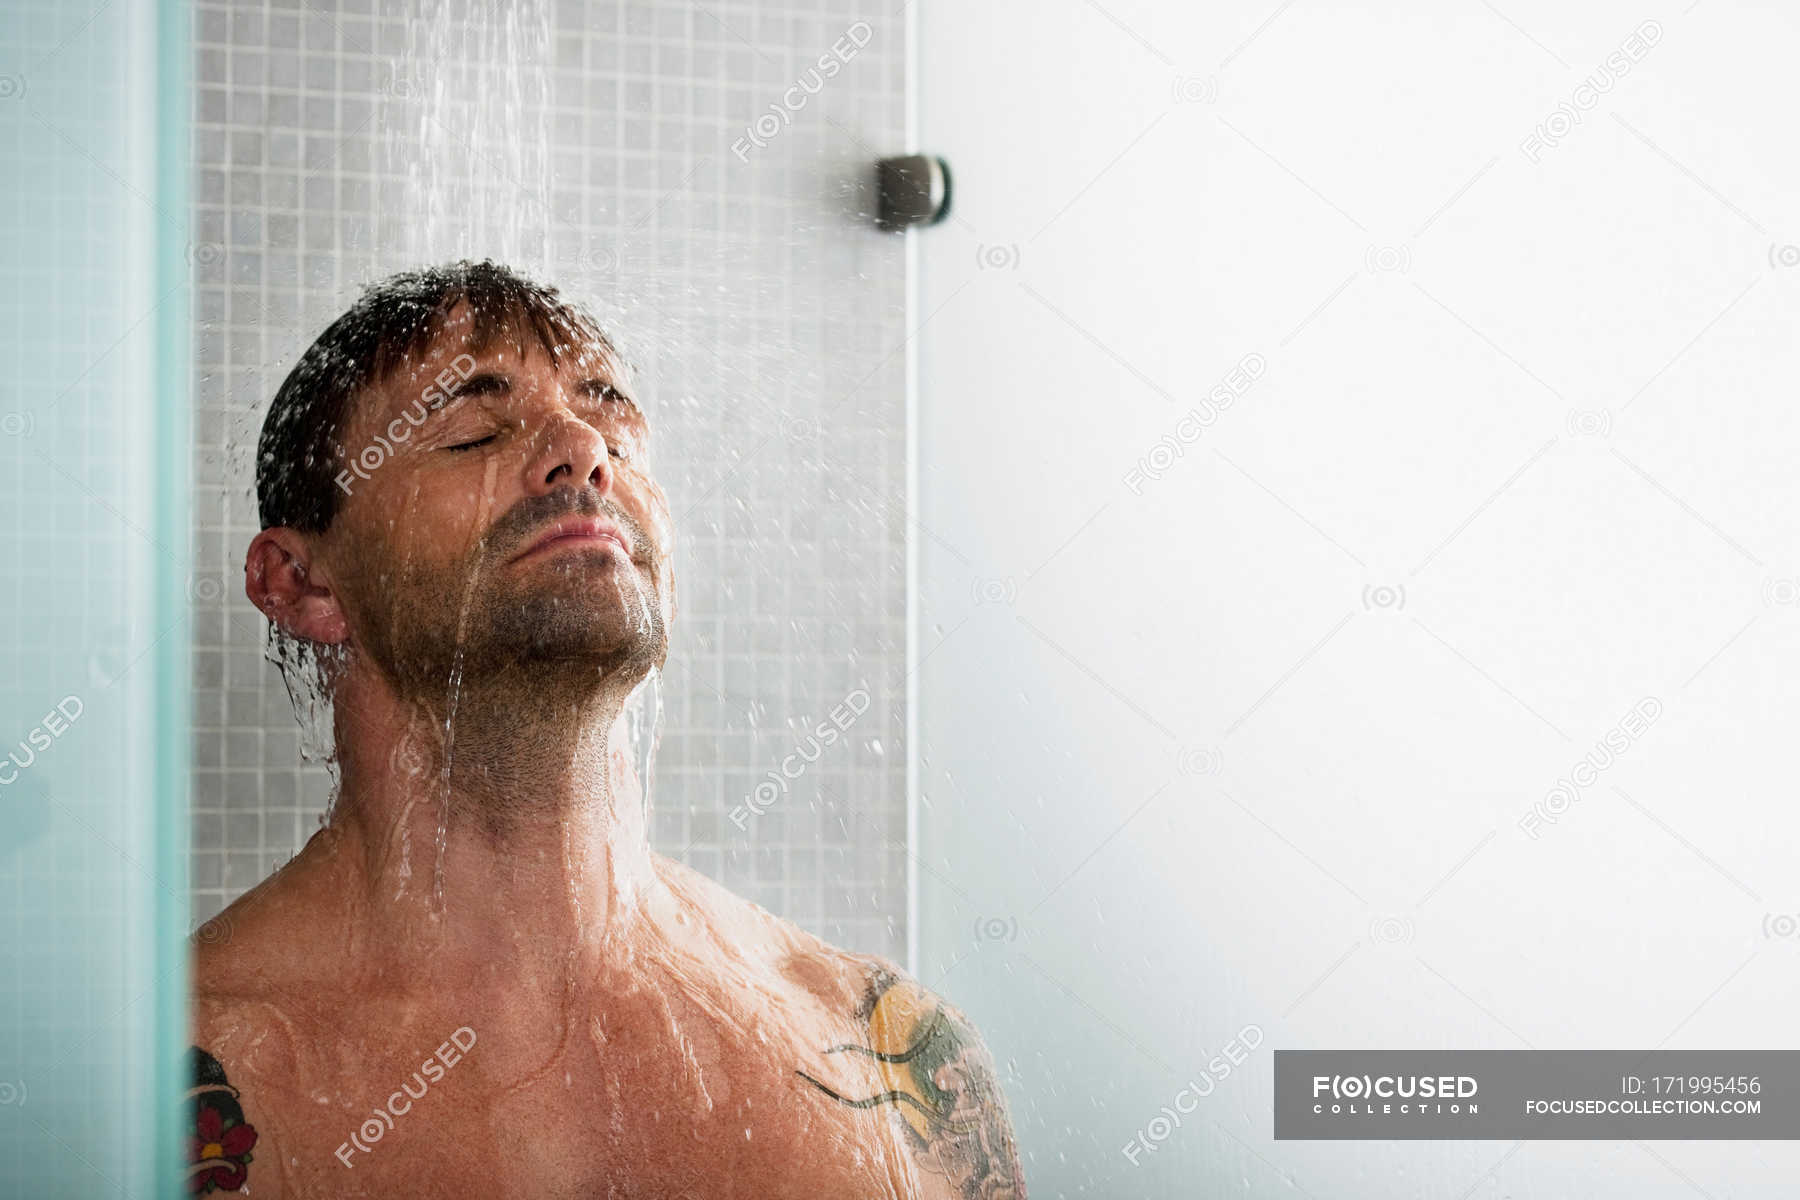 Very in shower. Мужчина моется. Мужчина в душе. Парни моются в душевой. Мужчина моется в душе.